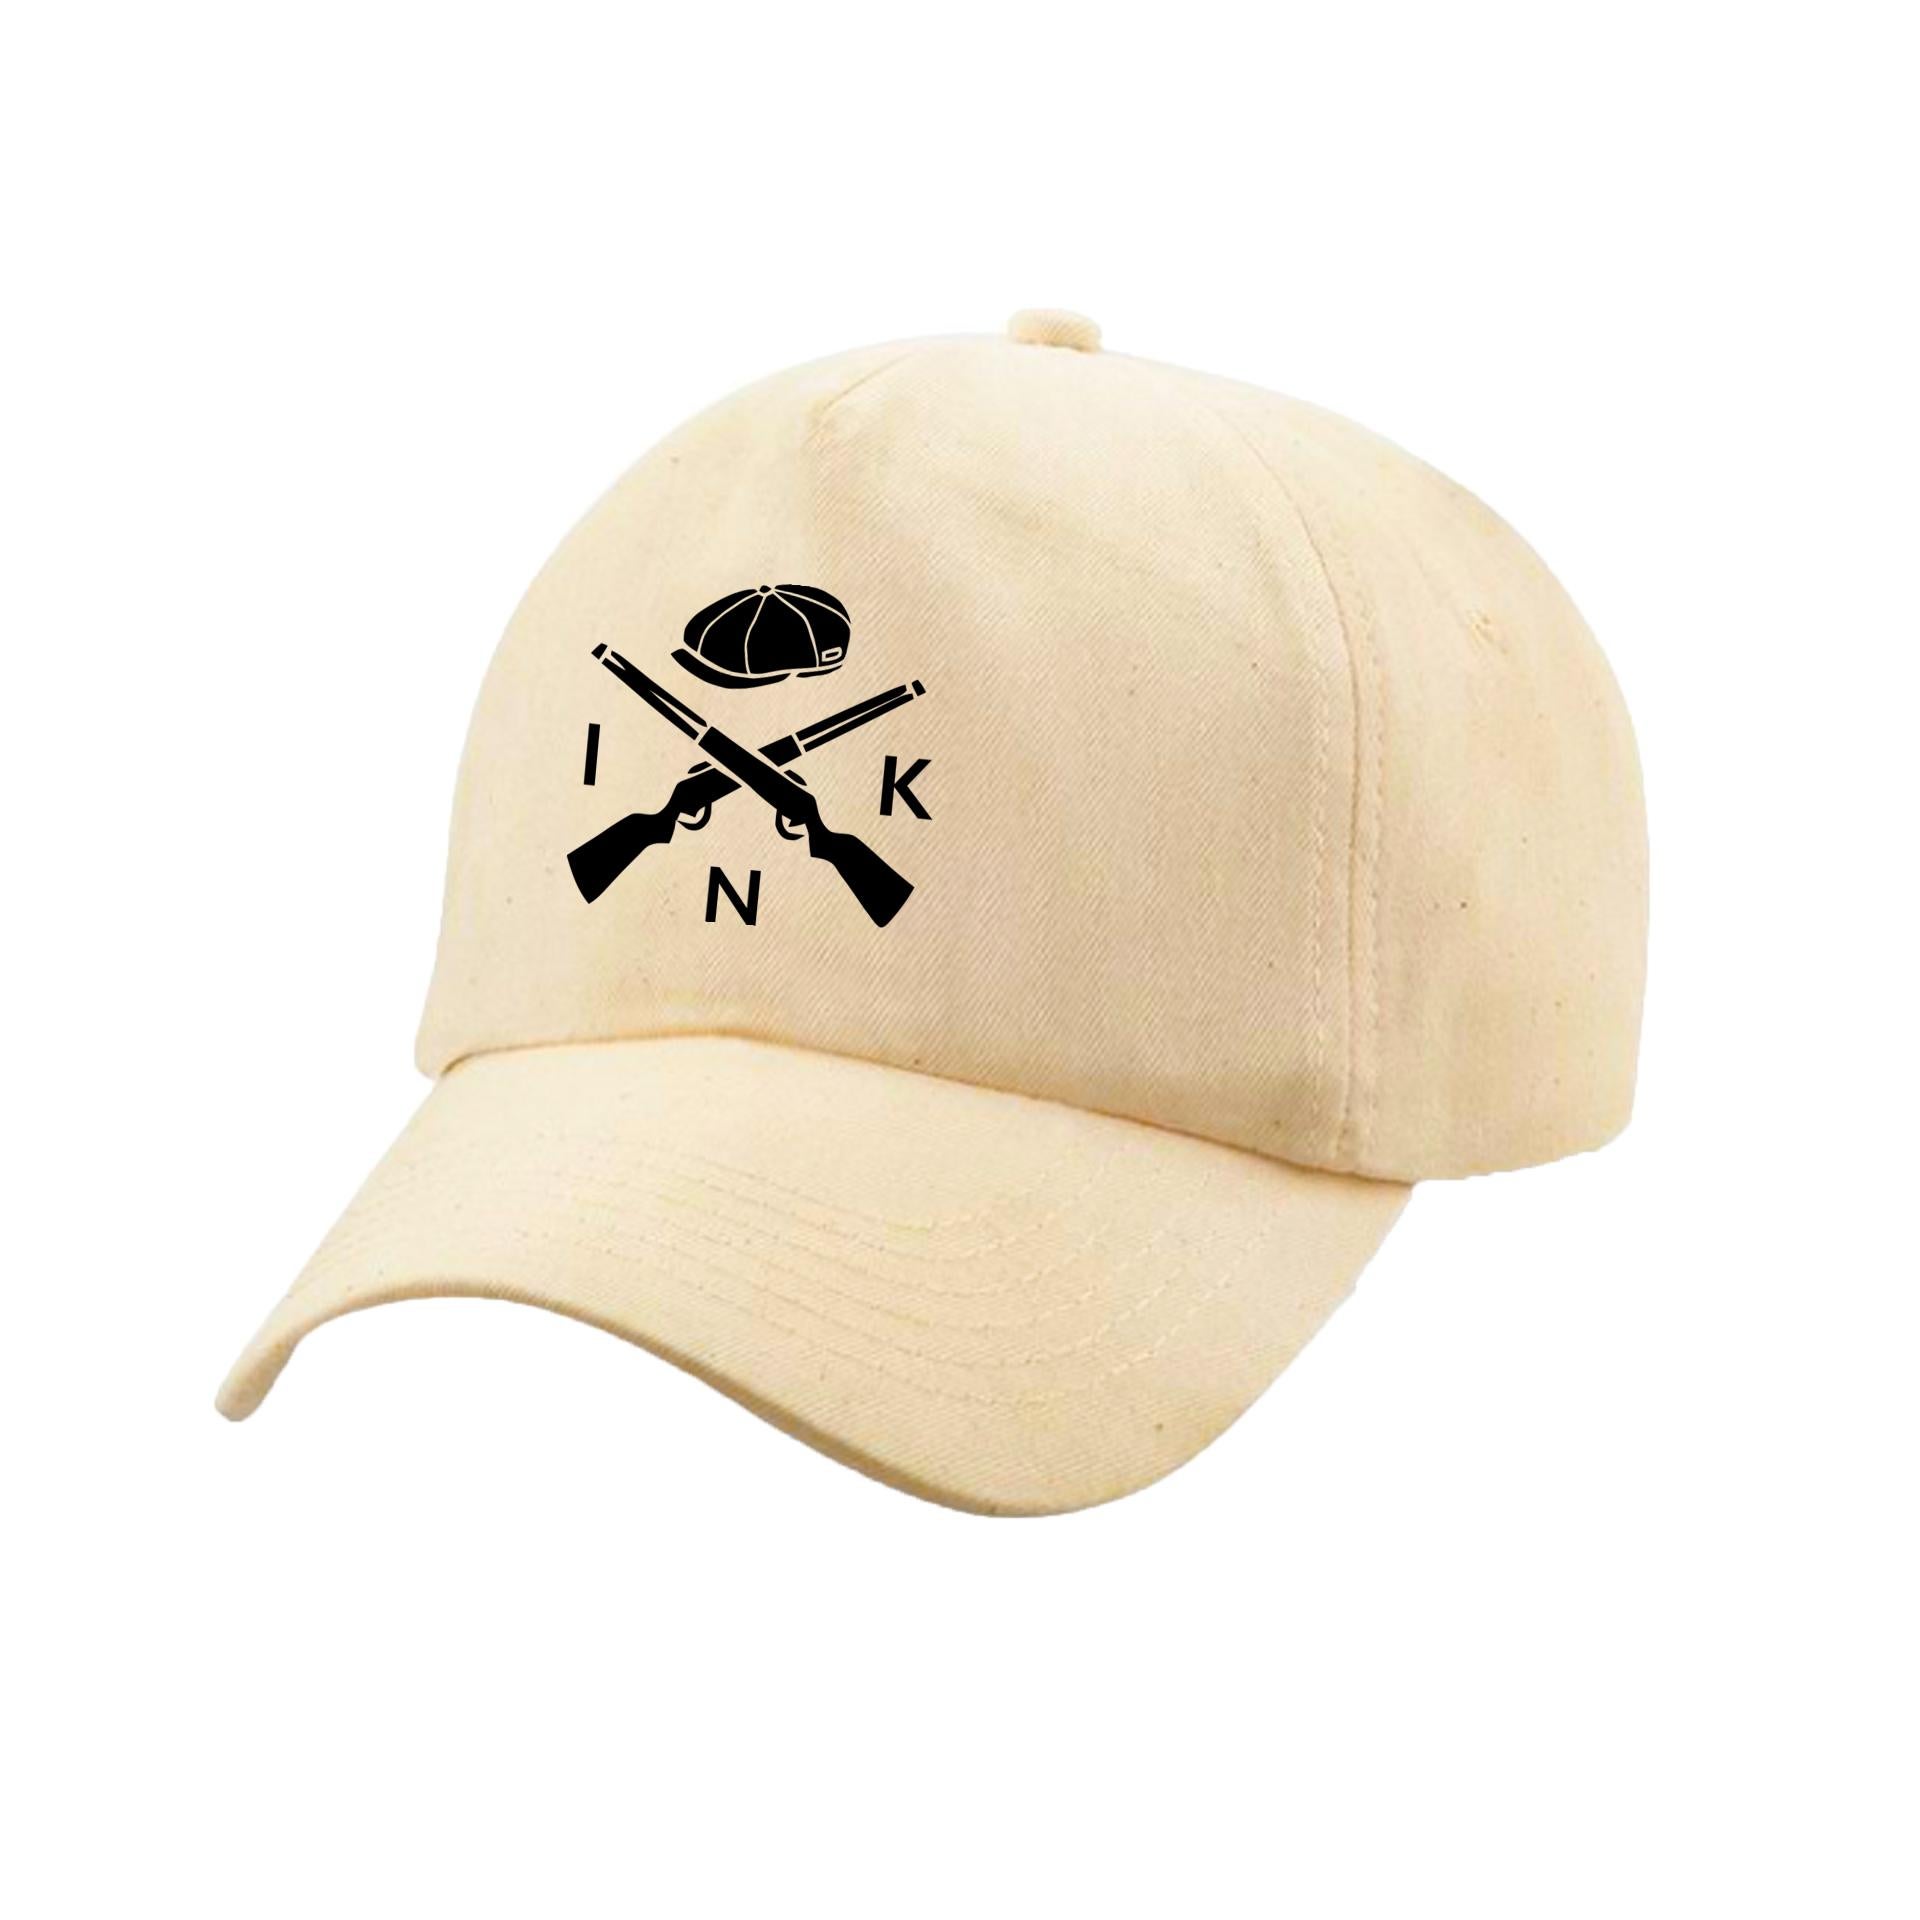 White Ivory hat cap NWOT